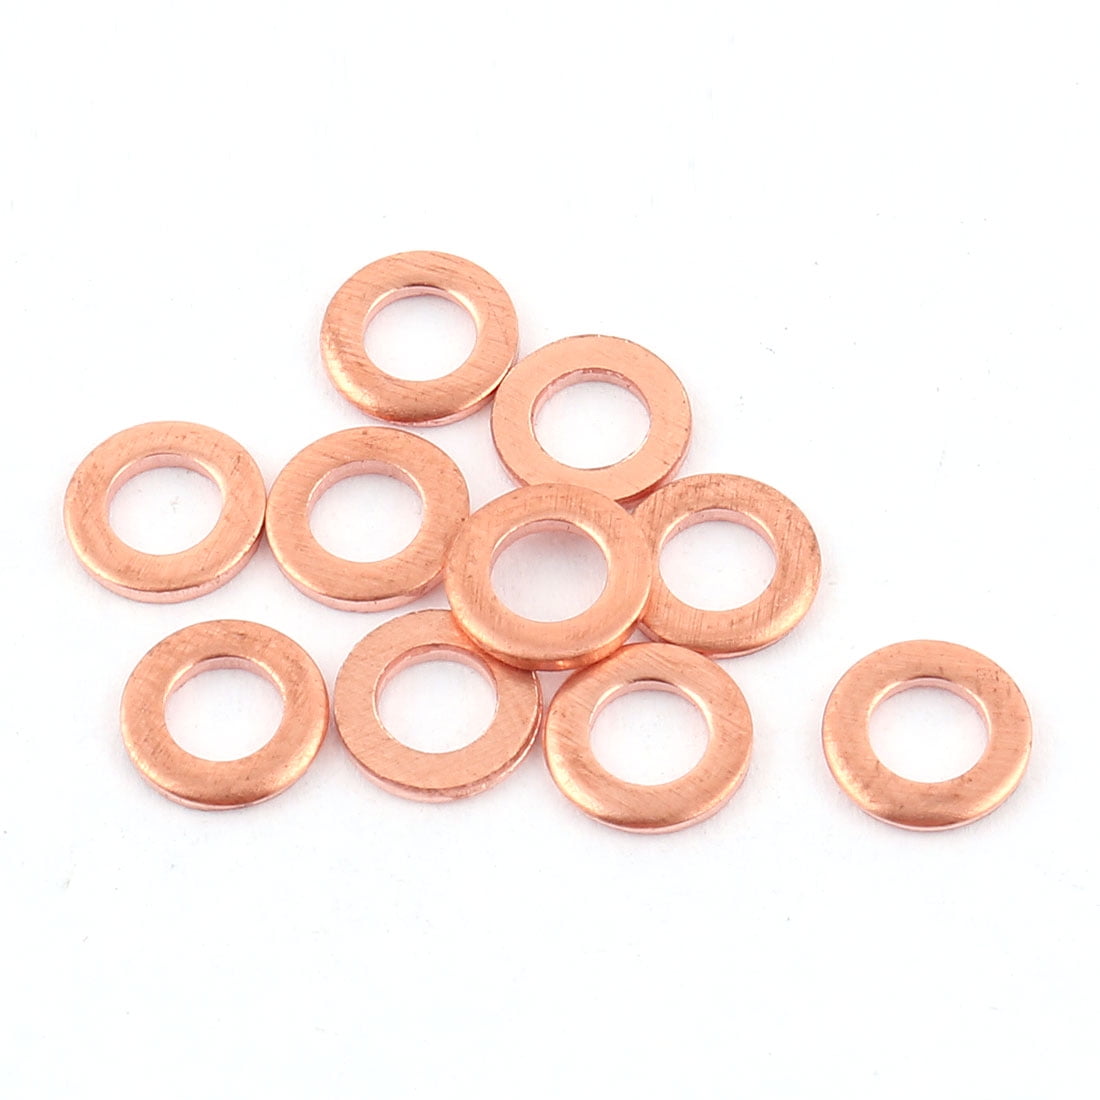 280x/Kit Copper Crush Washers Seal Sealing Flat O-Ring Gaskets P3I1 